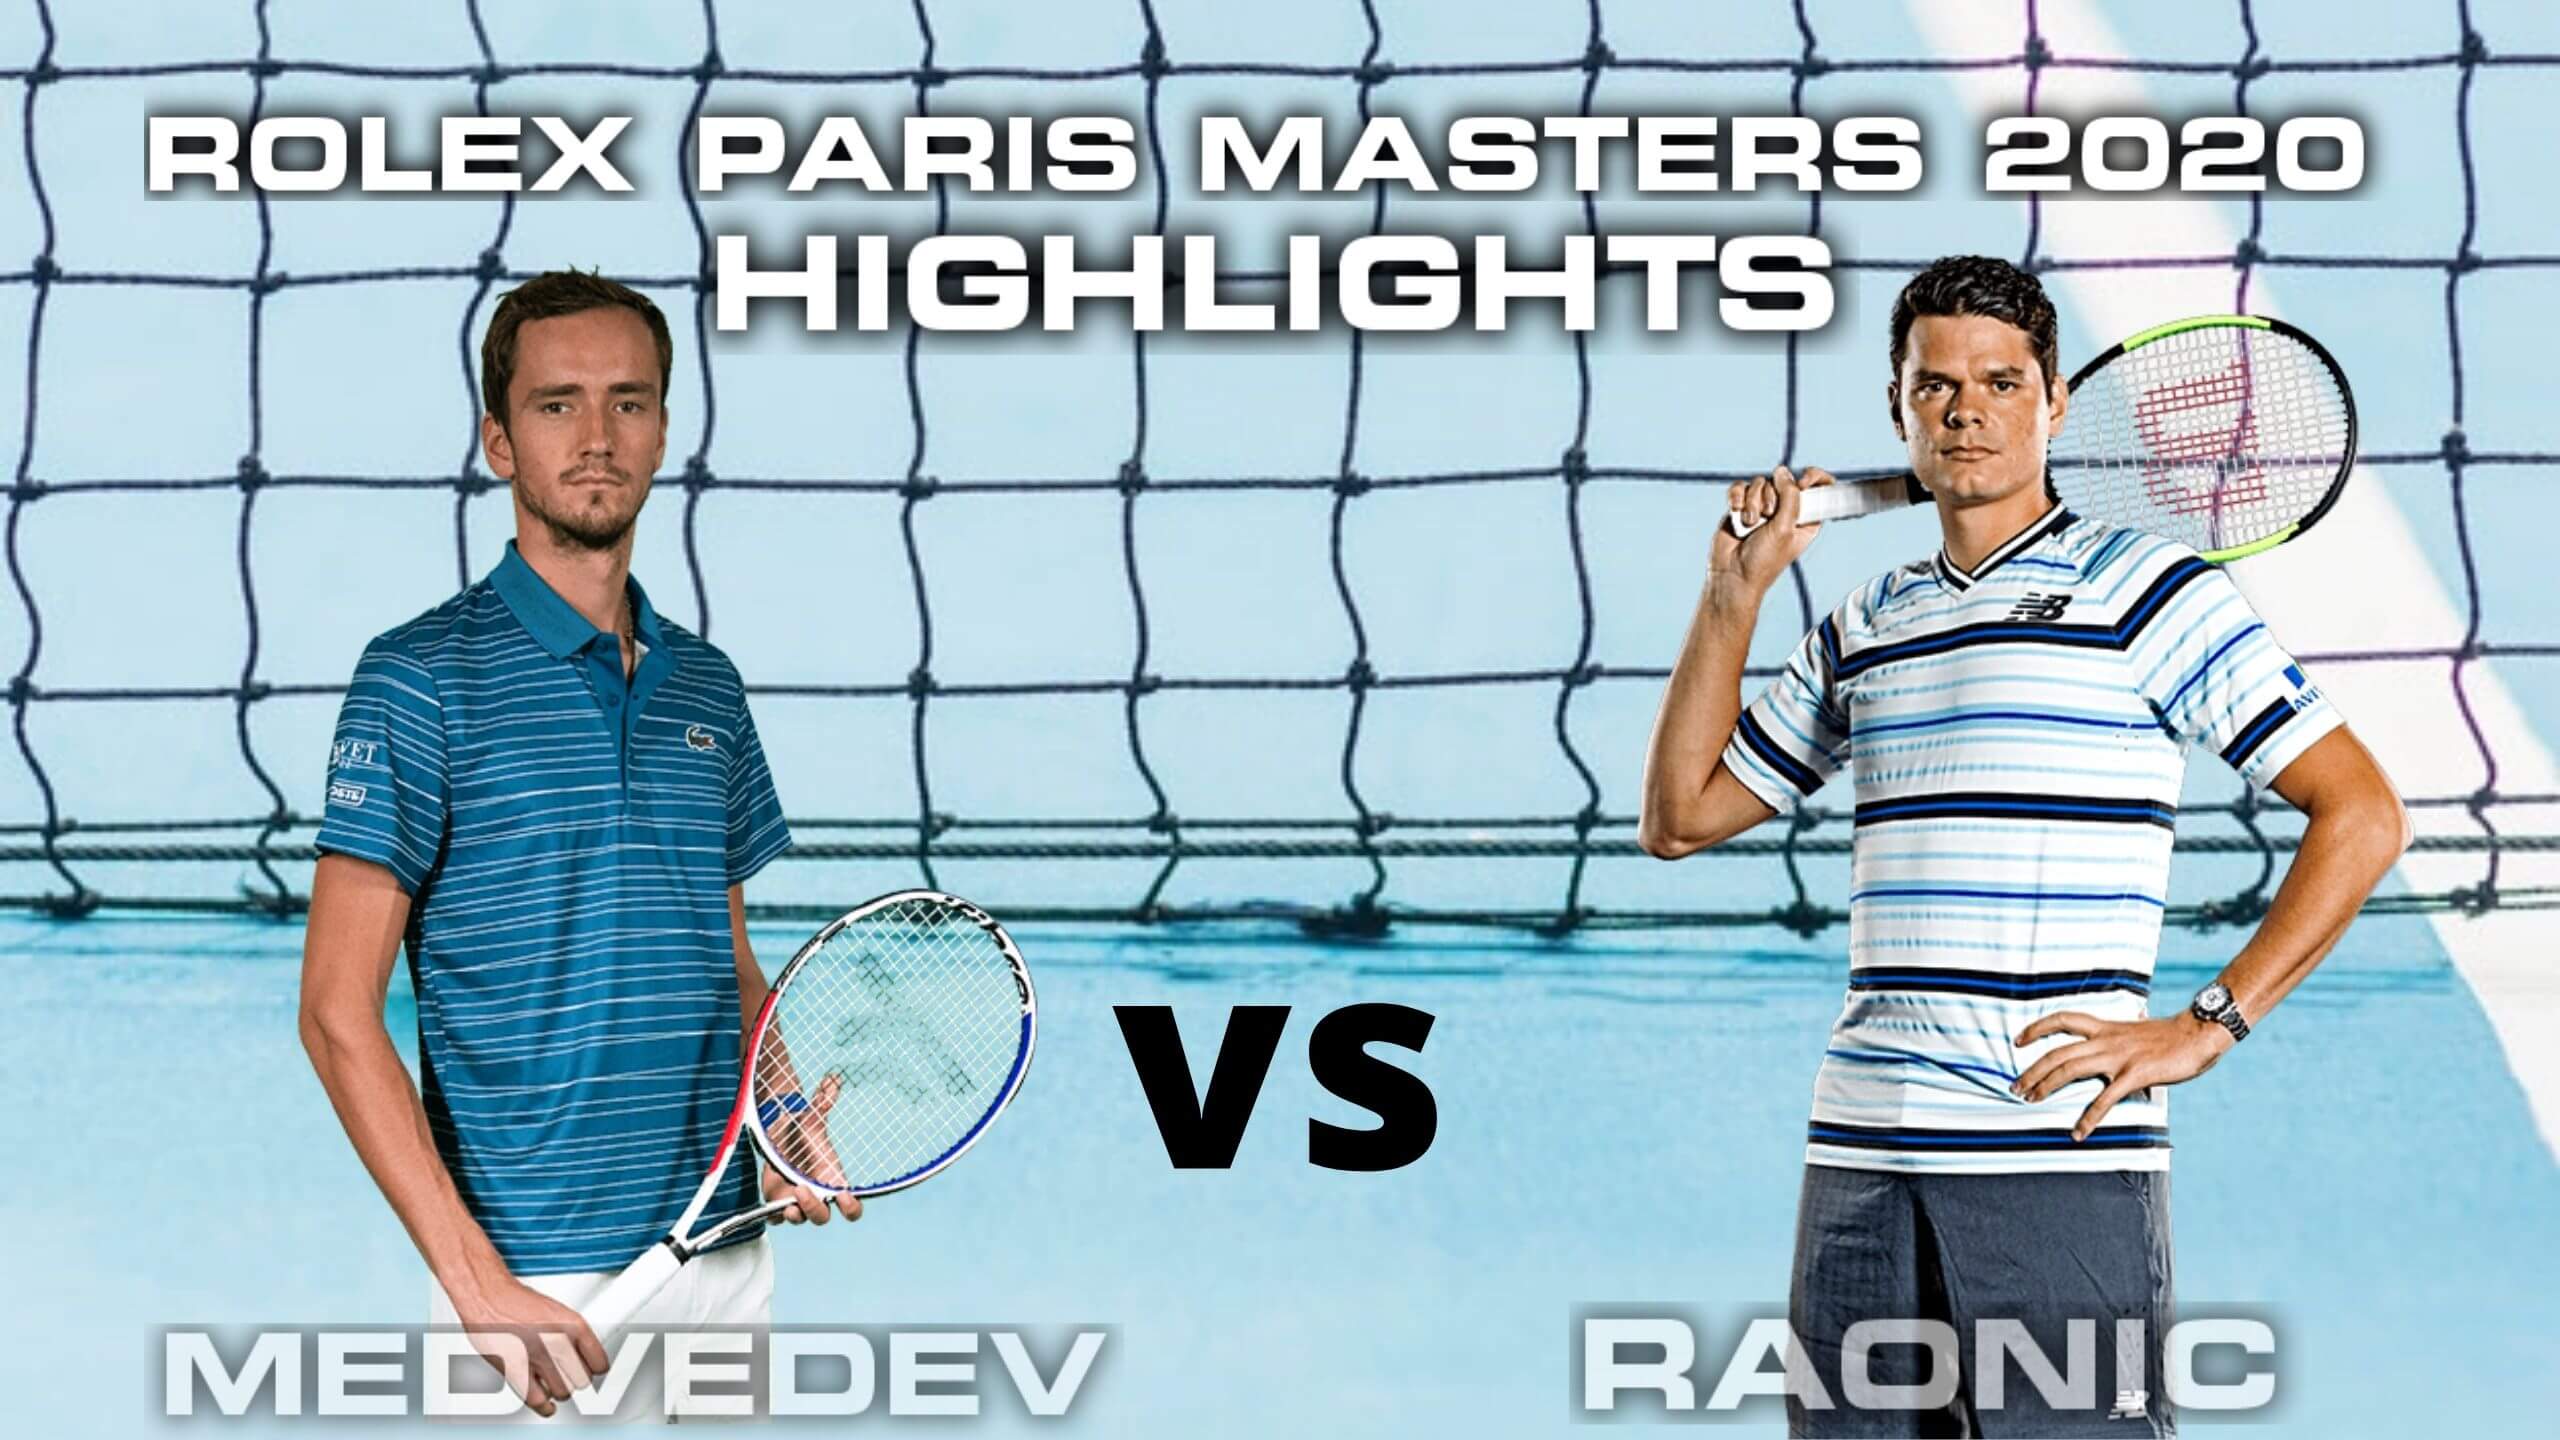 D Medvedev vs M Raonic Semi Final Highlights 2020